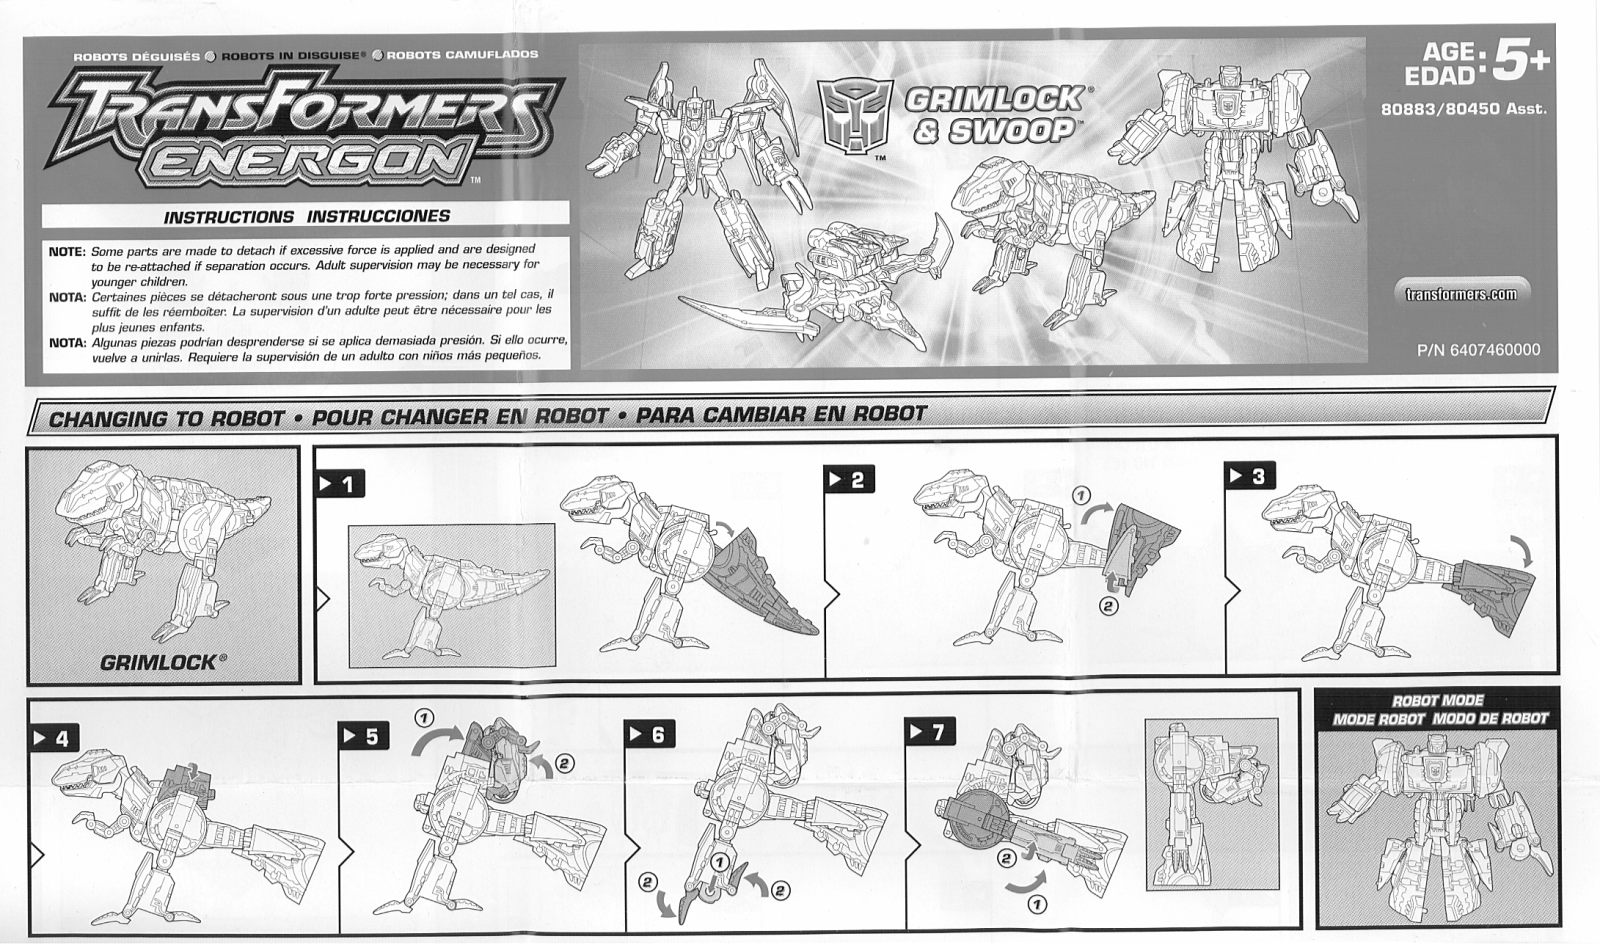 HASBRO Transformers Energon Grimlock and Swoop User Manual